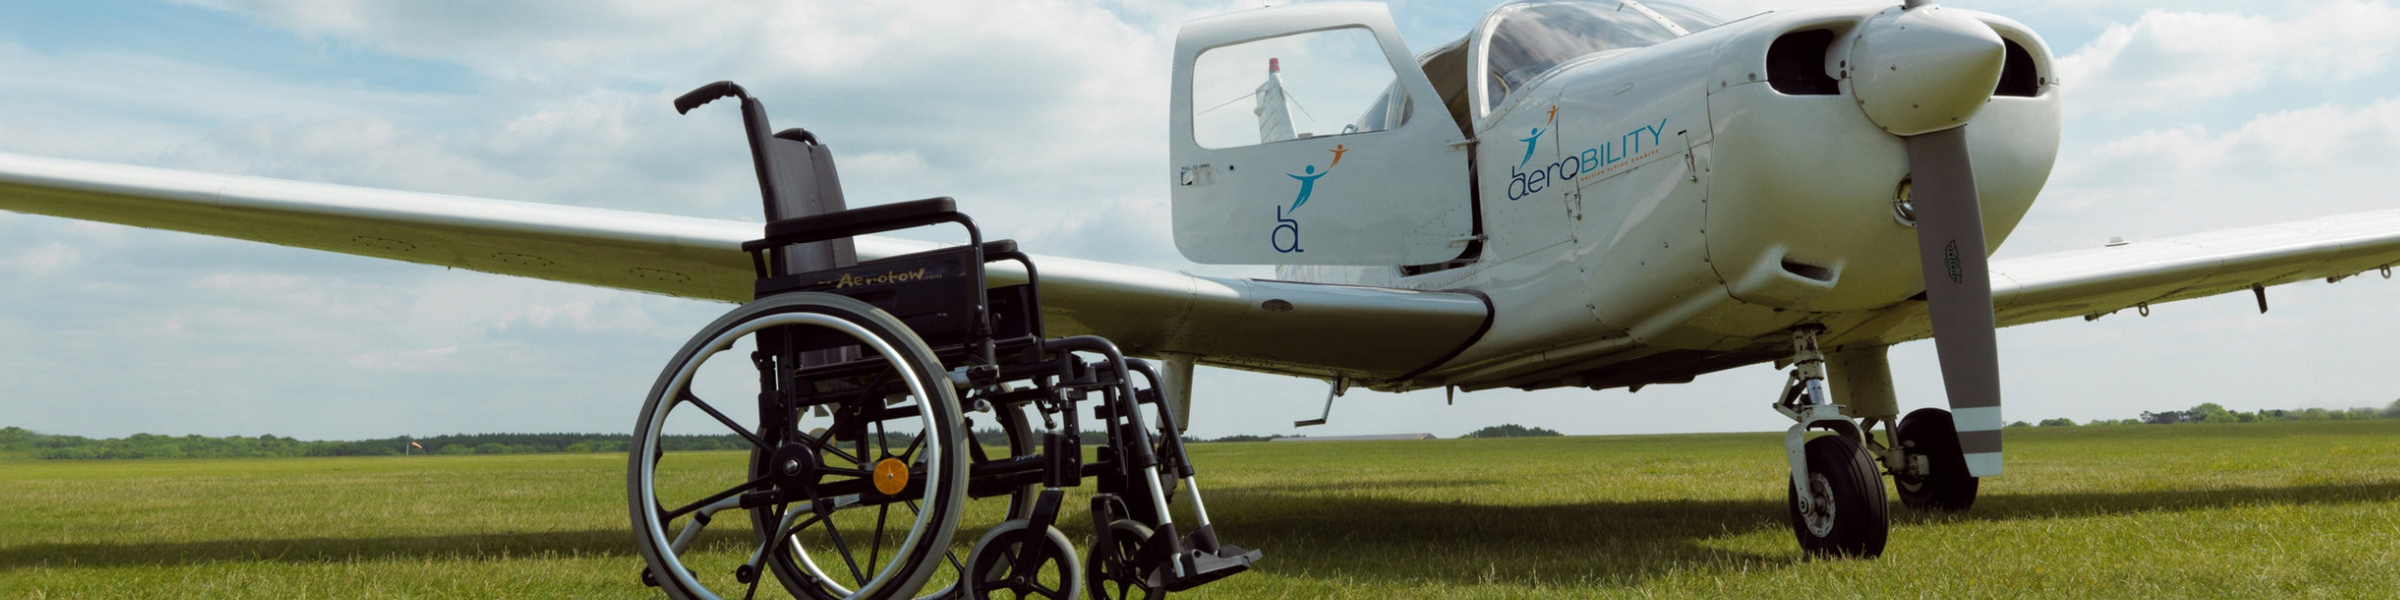 Aerobility, empty wheelchair next to an aeroplane, banner